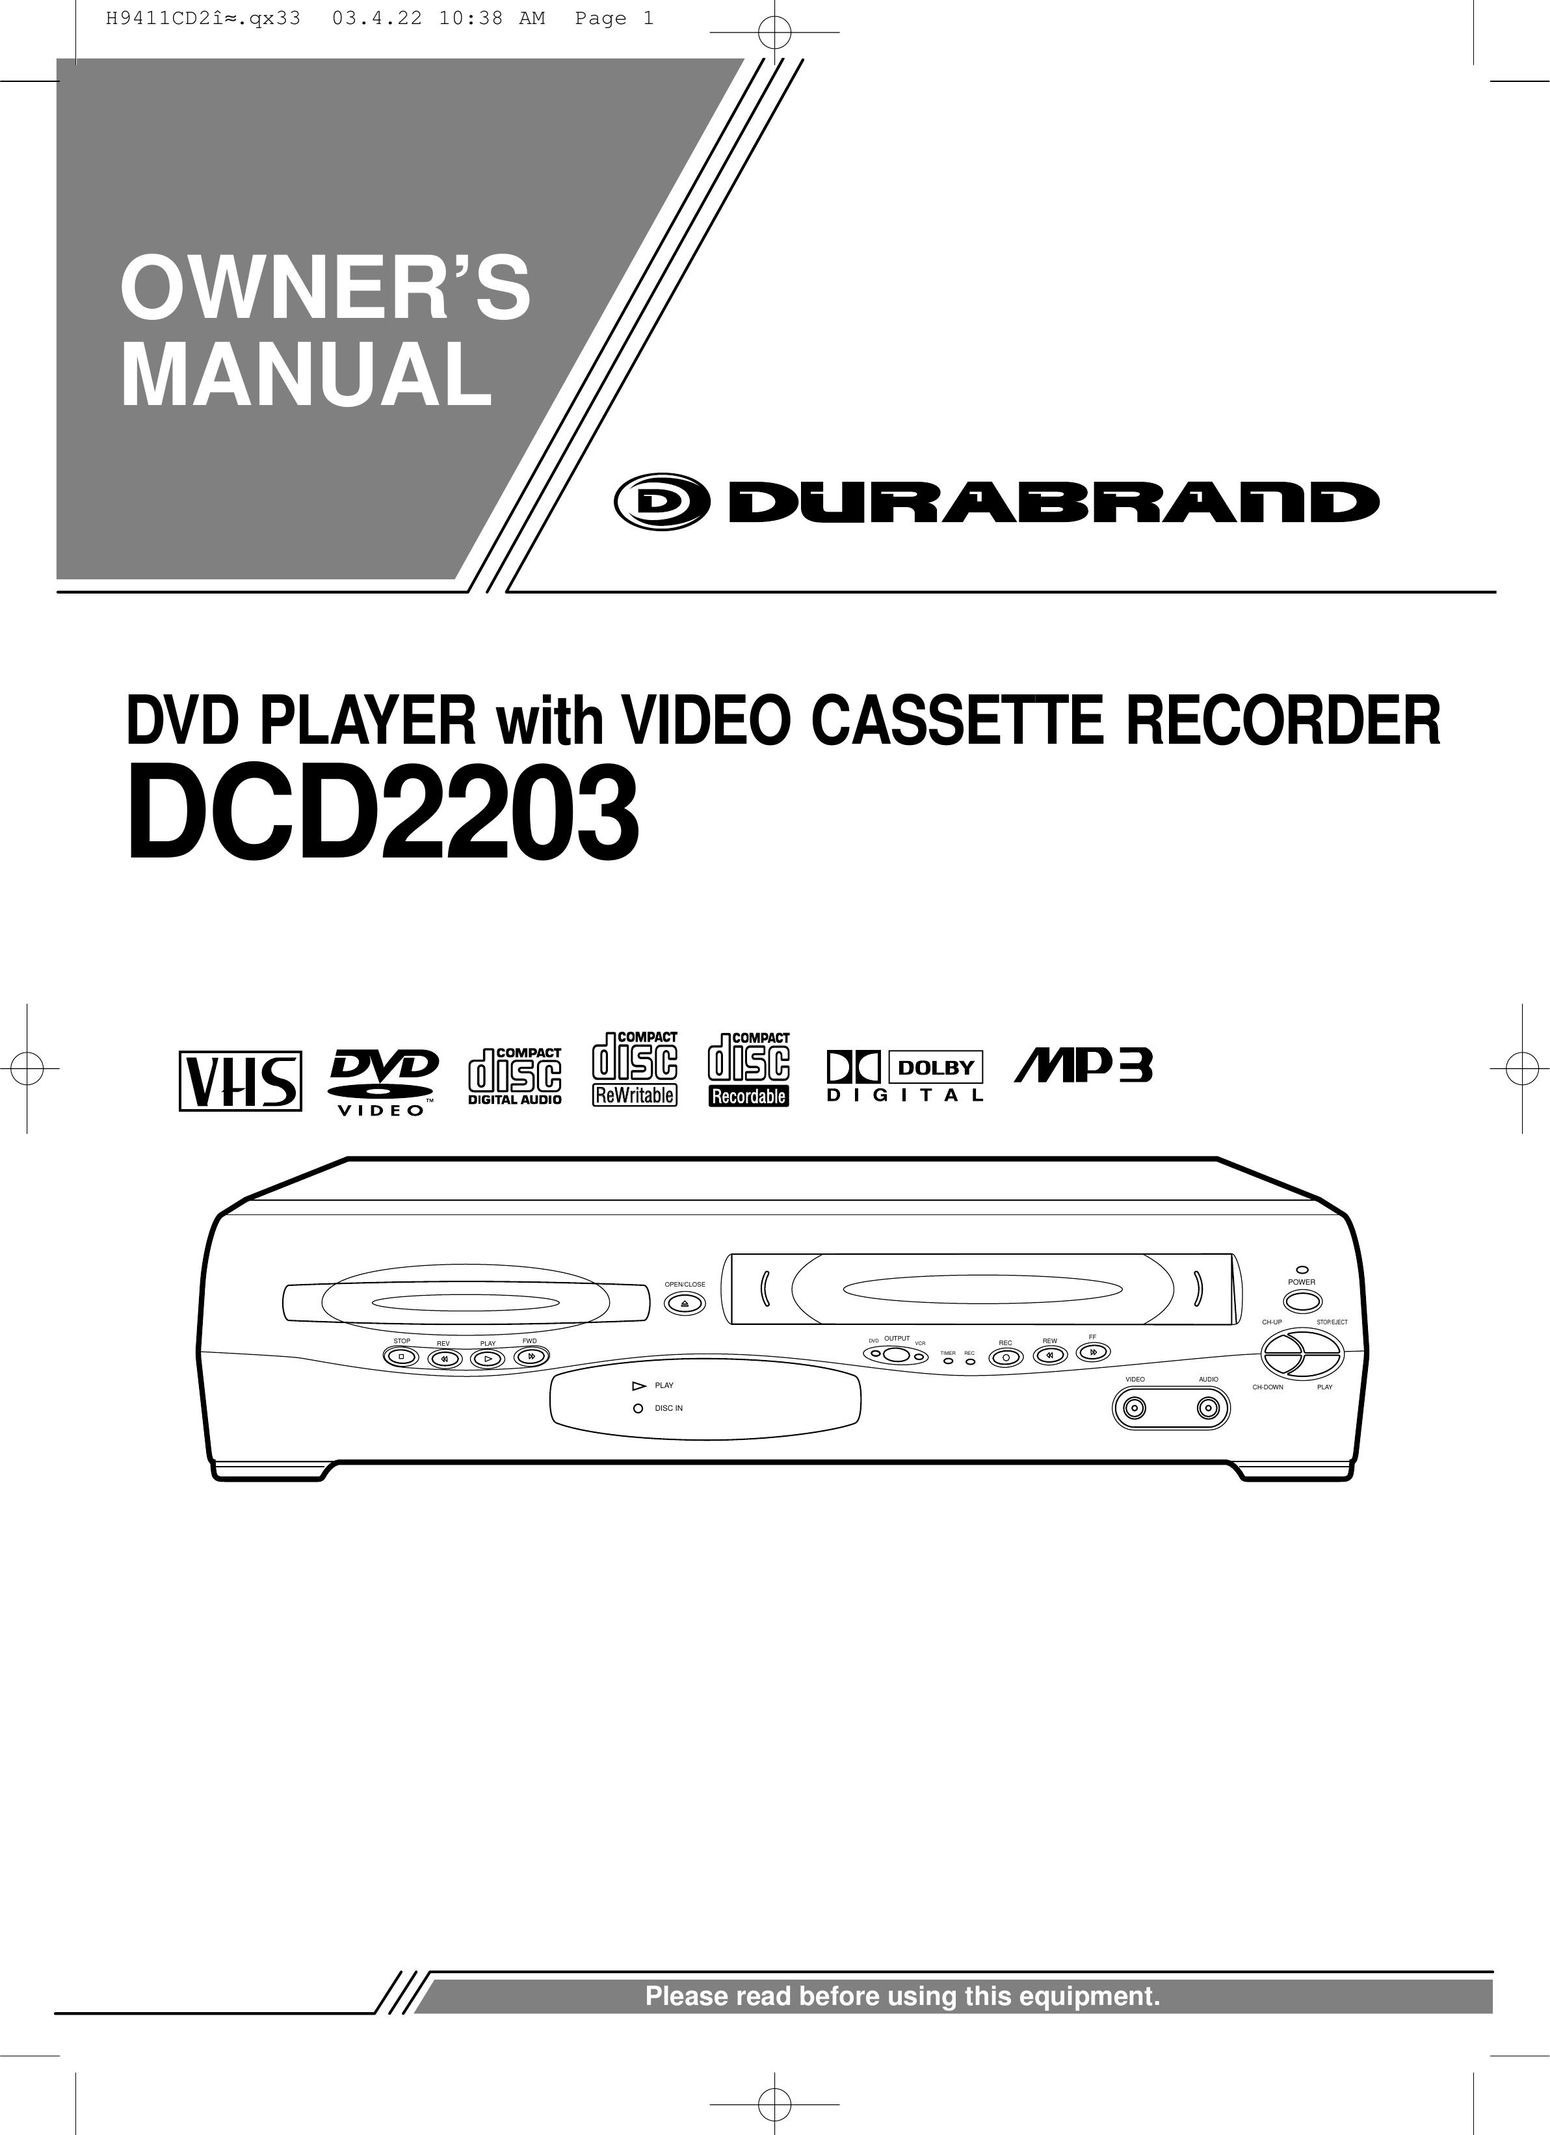 Durabrand DCD2203 DVD VCR Combo User Manual